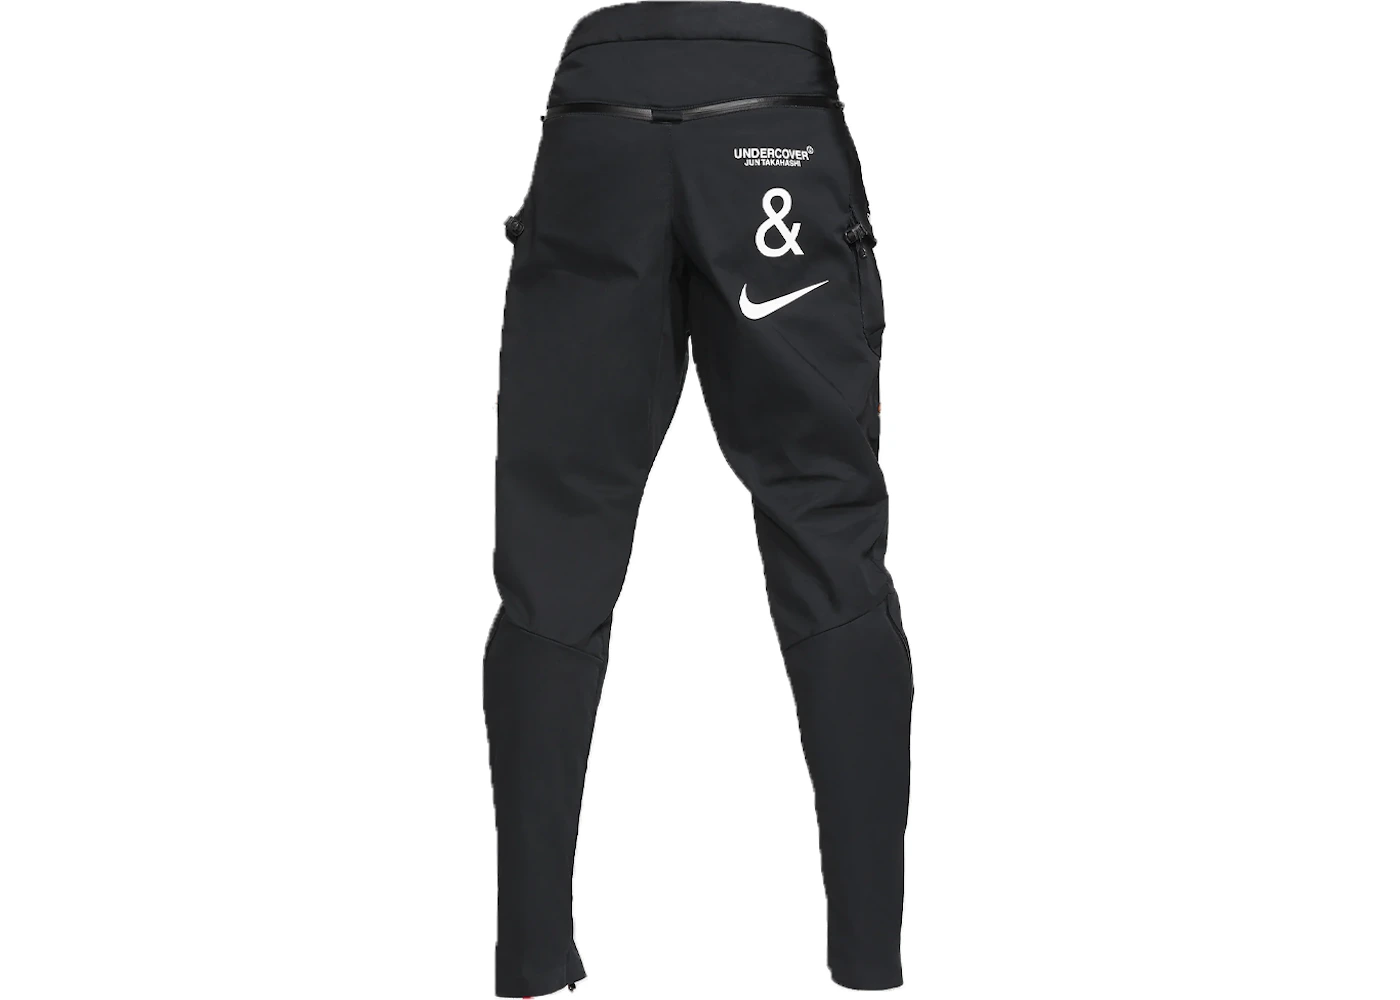 Nike x Undercover Cargo Pants Black/White Men's - FW19 - US